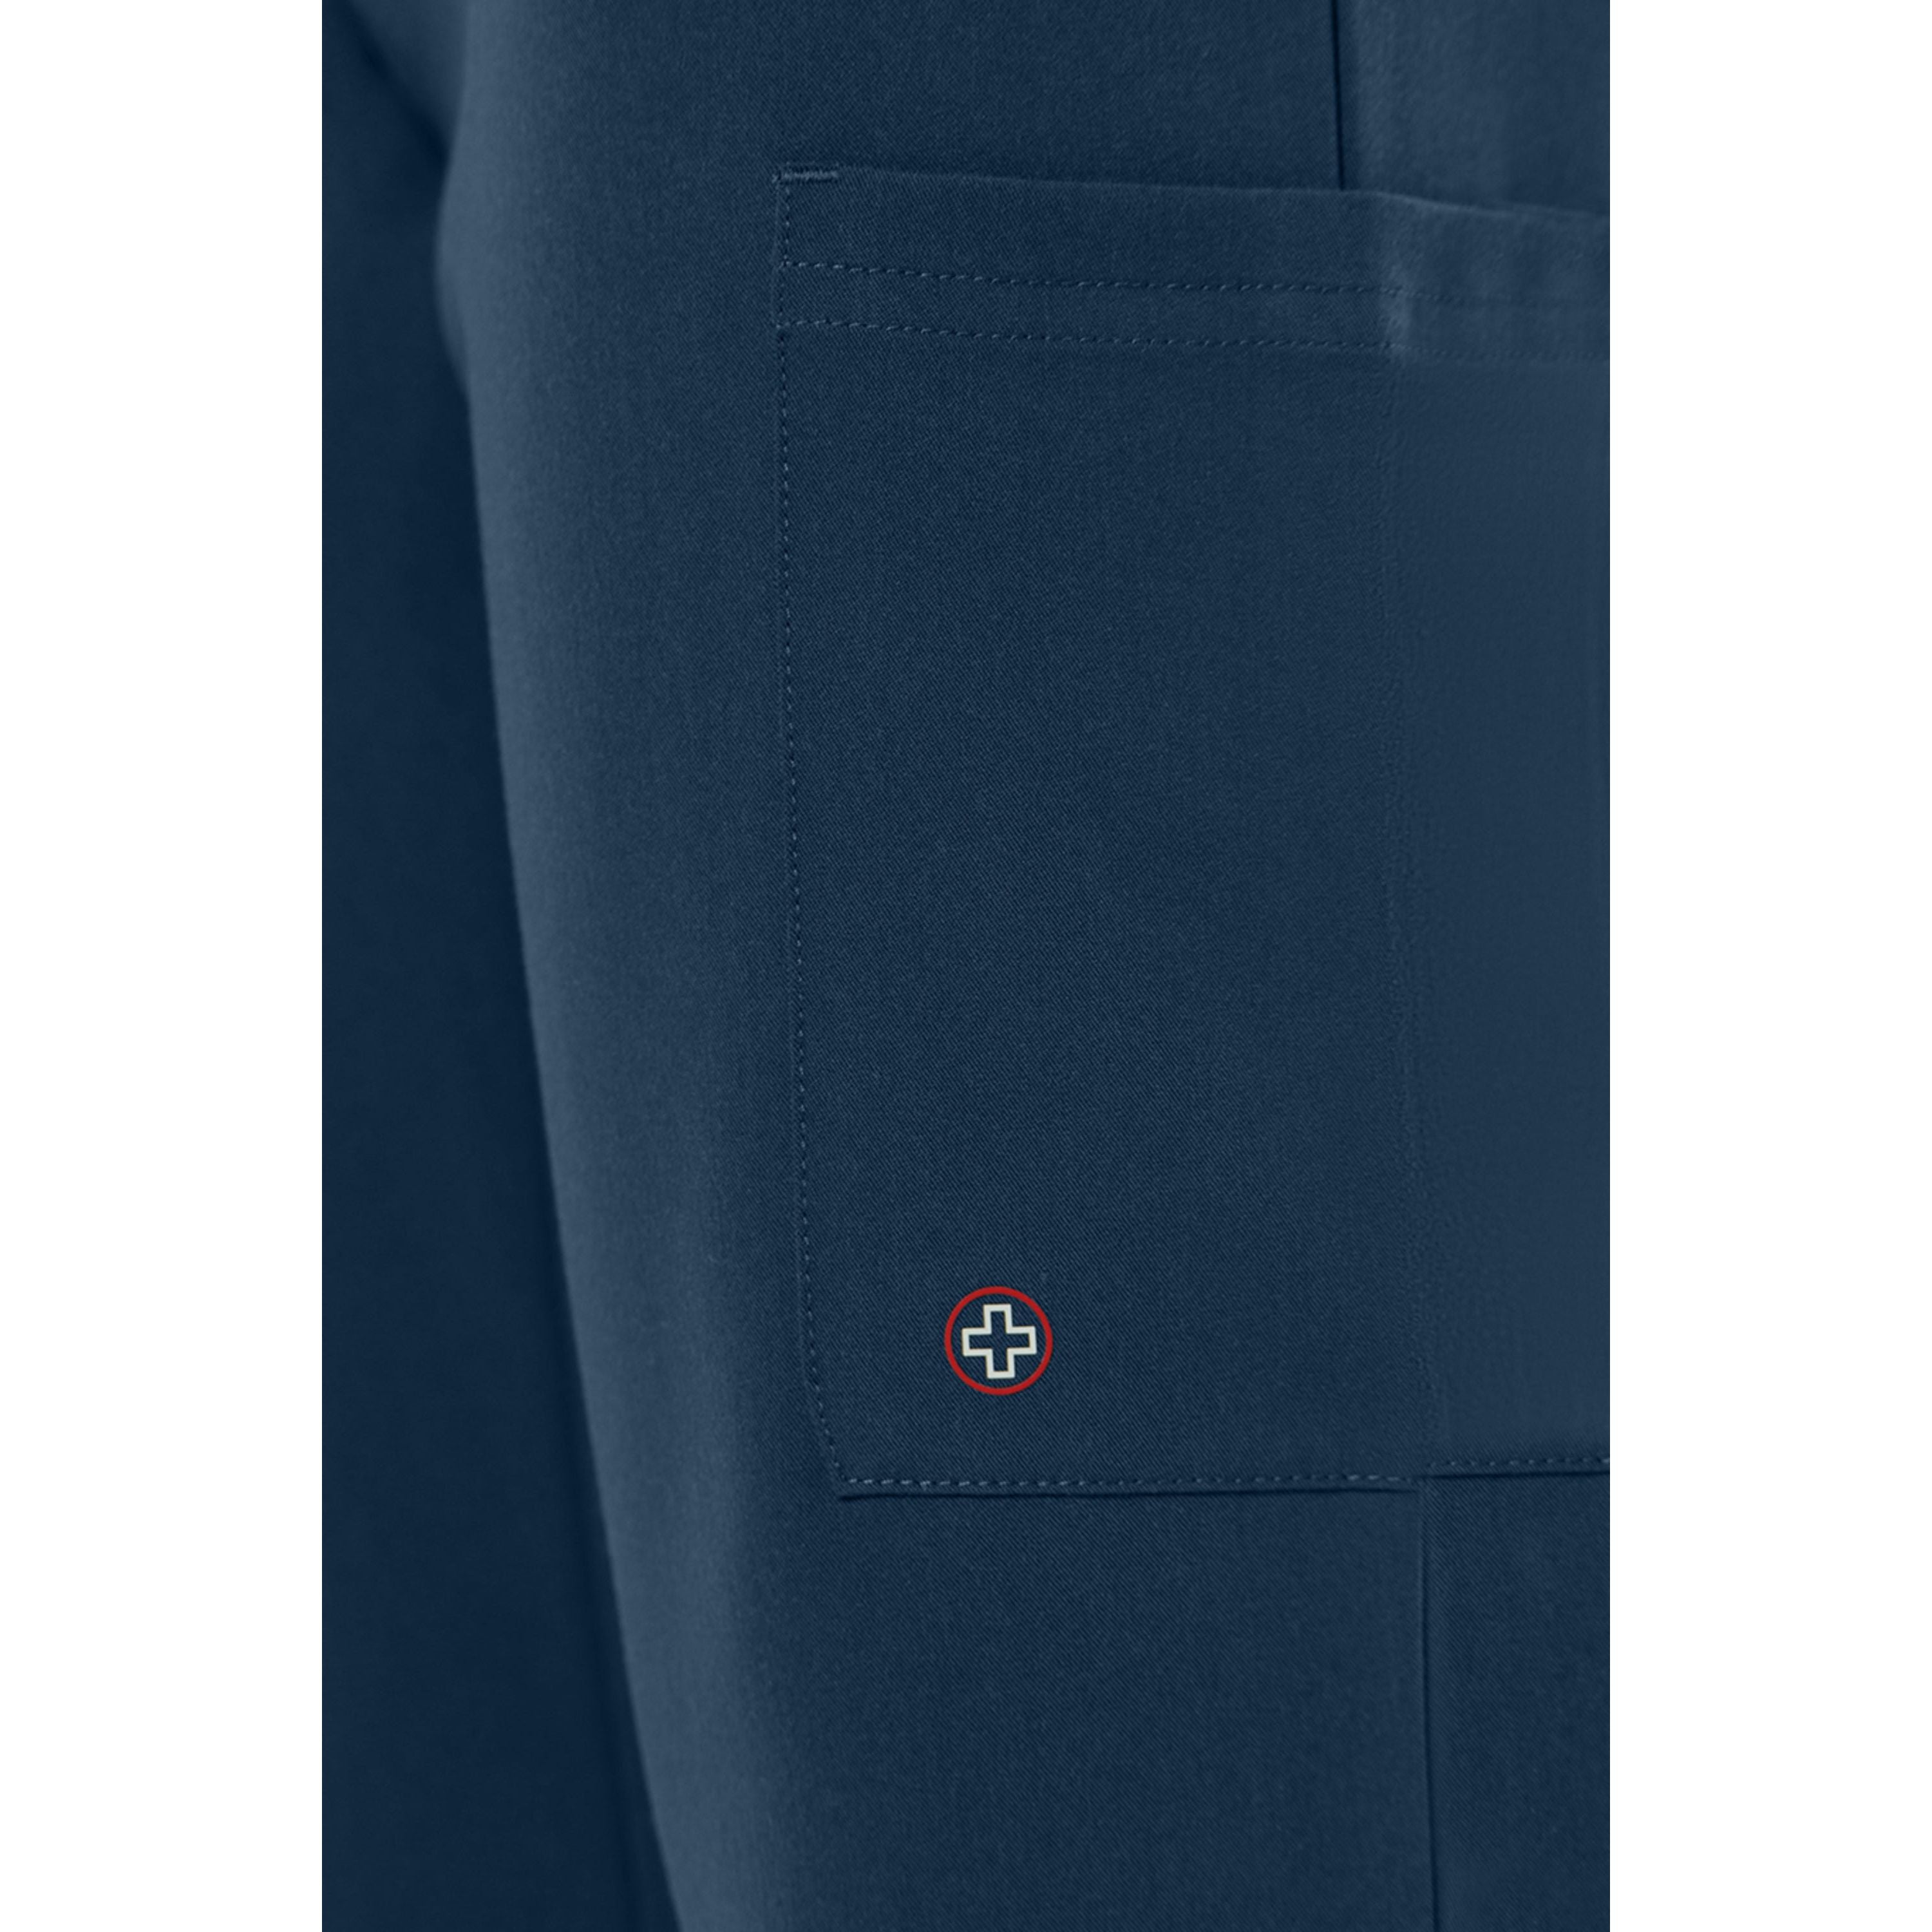 V-TESS Slim Scrub Pants 370 Reg Inseam 28 1/2'' SALE